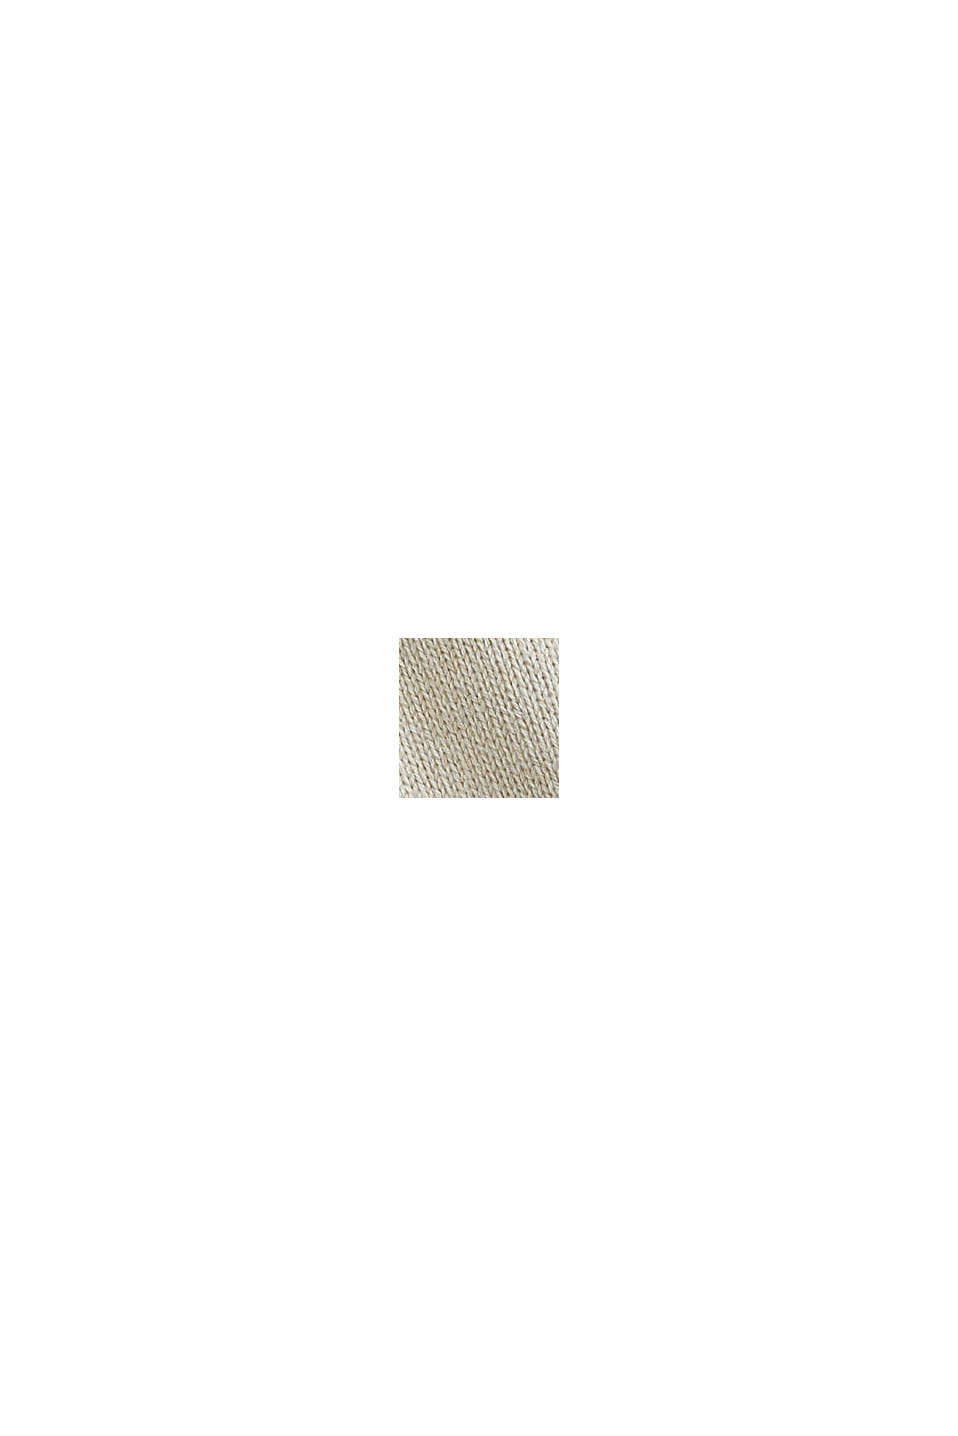 Jersey con diseño de punto texturizado, algodón ecológico, OFF WHITE, swatch